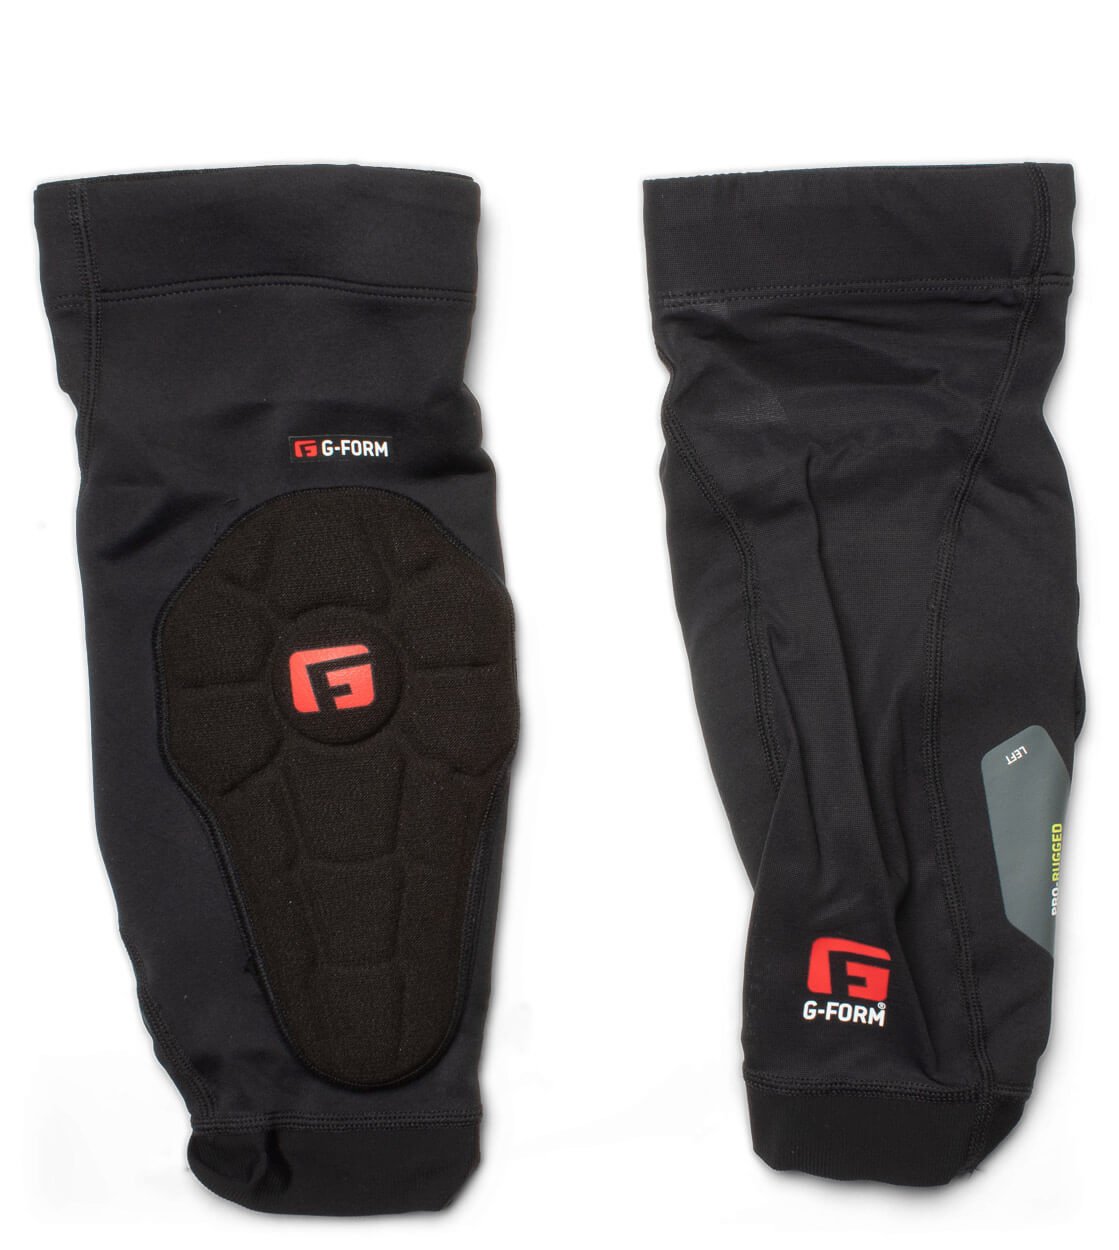 G-Form Knee Pad Pro-Rugged